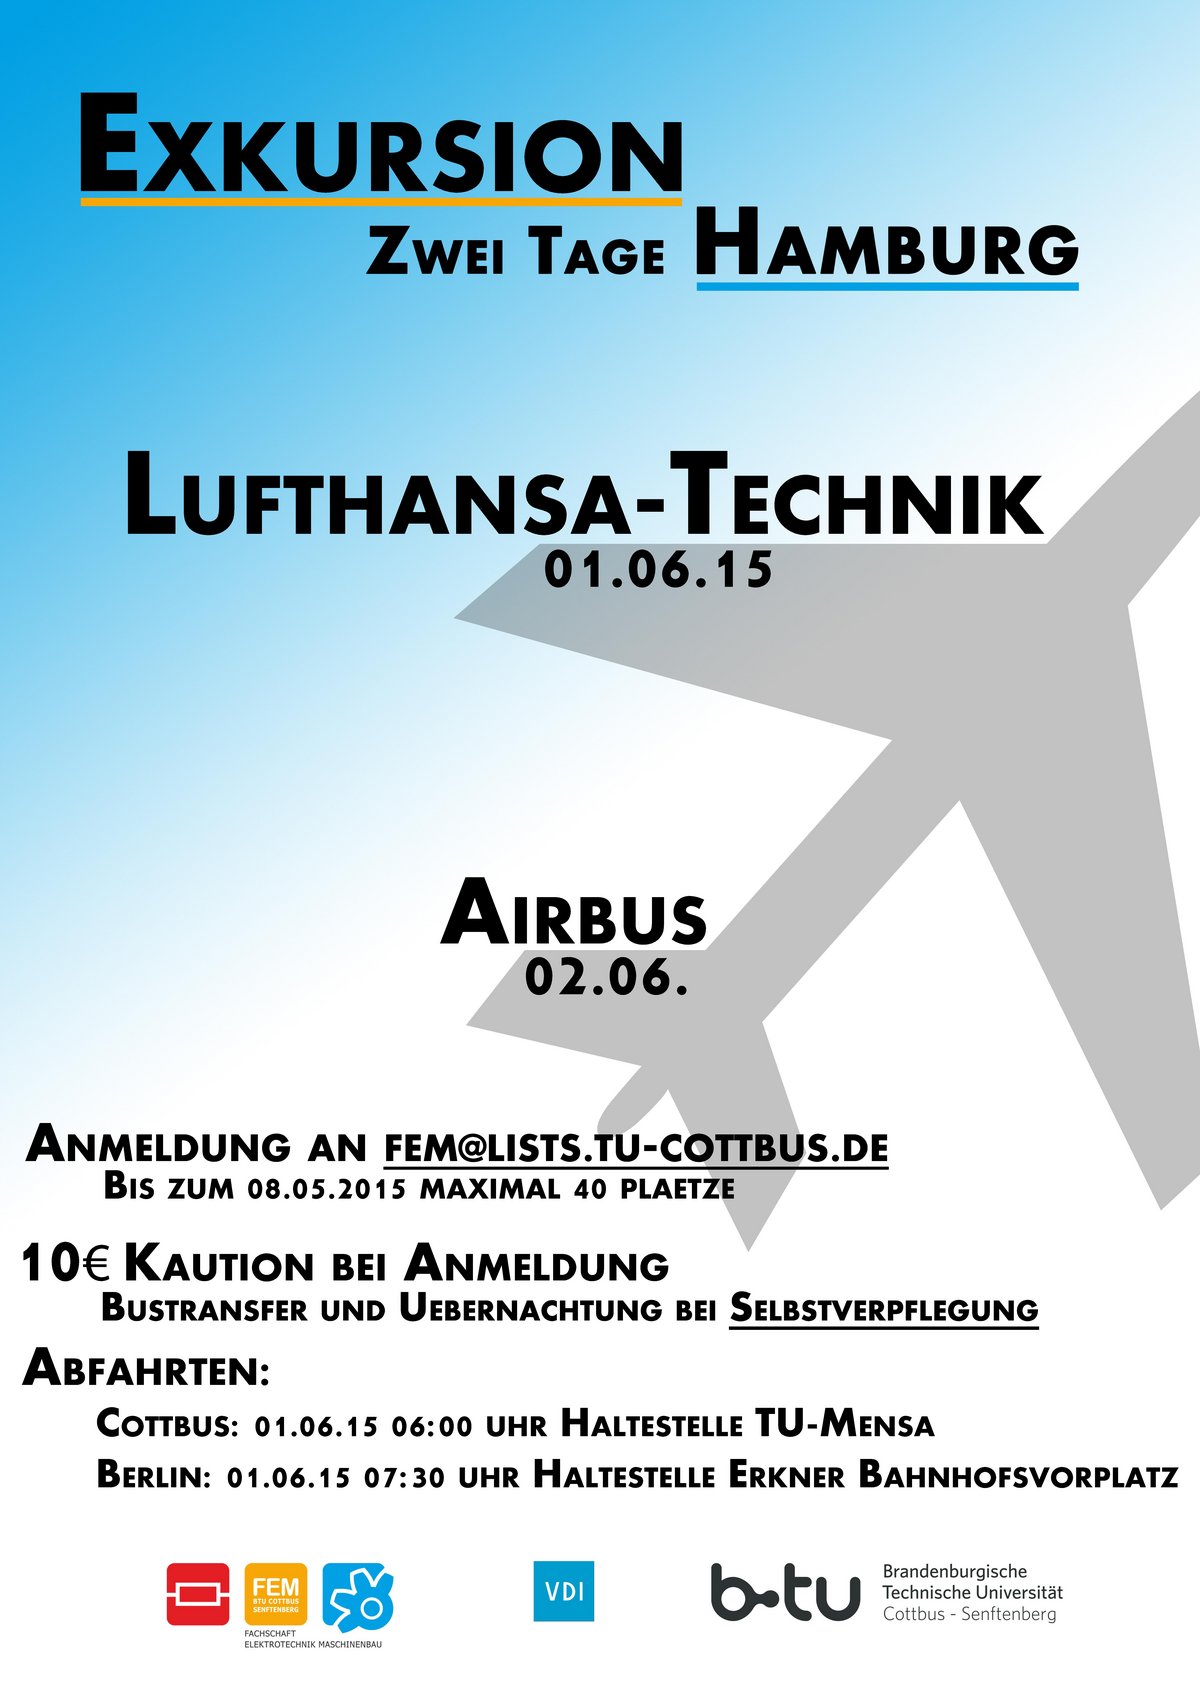 Exkursion nach Hamburg "Lufthansa-Technik"